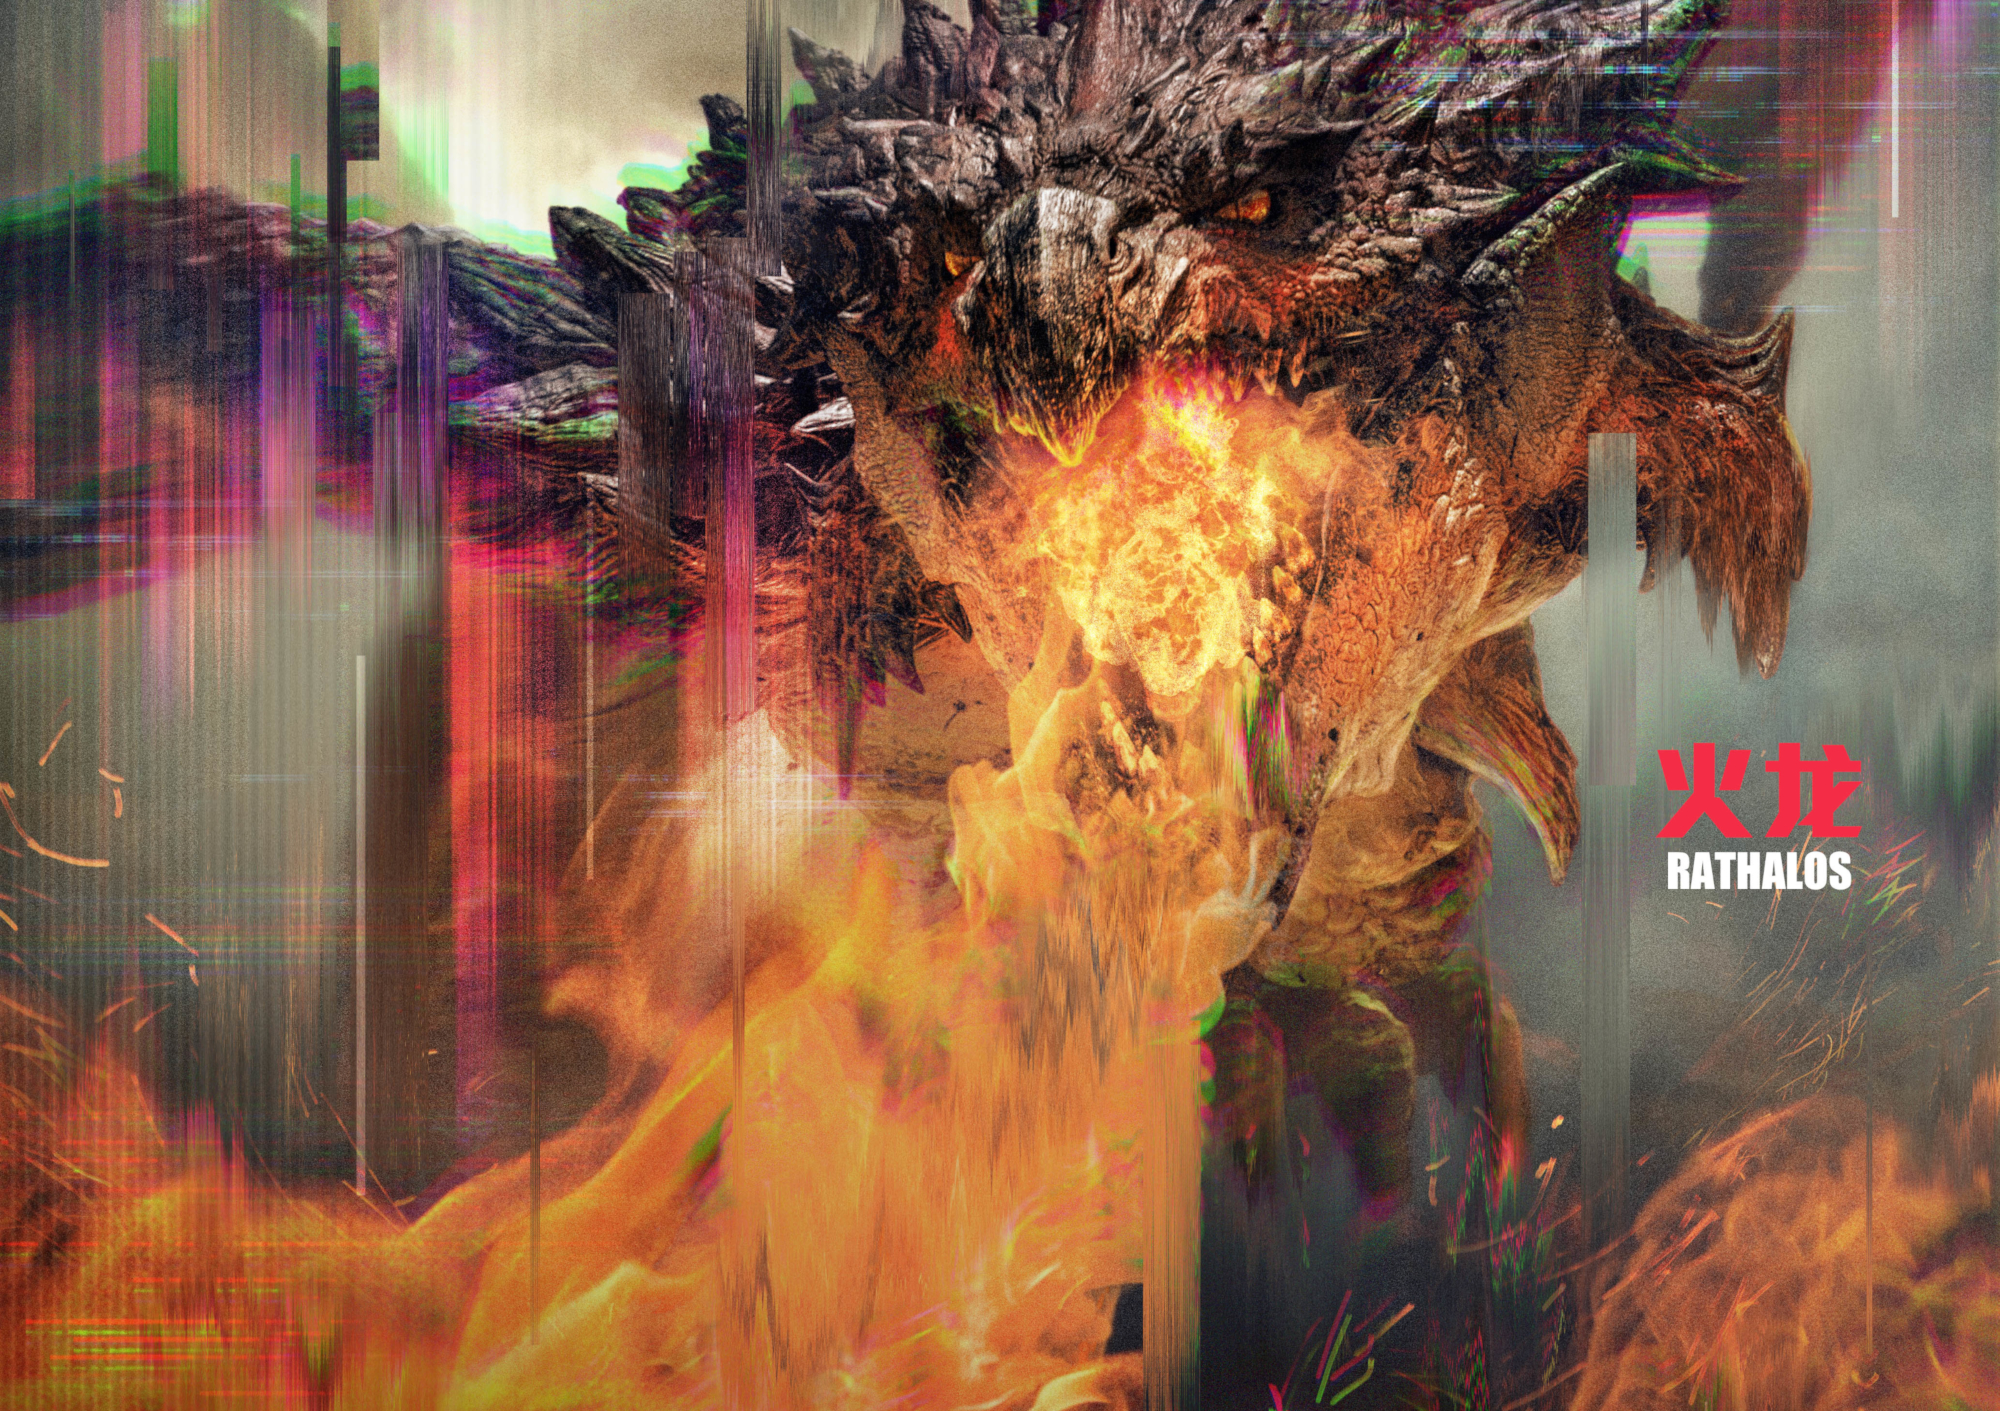 Monster Hunter Fonds d'écran, Arrières-plan, 1280x975, ID:296015